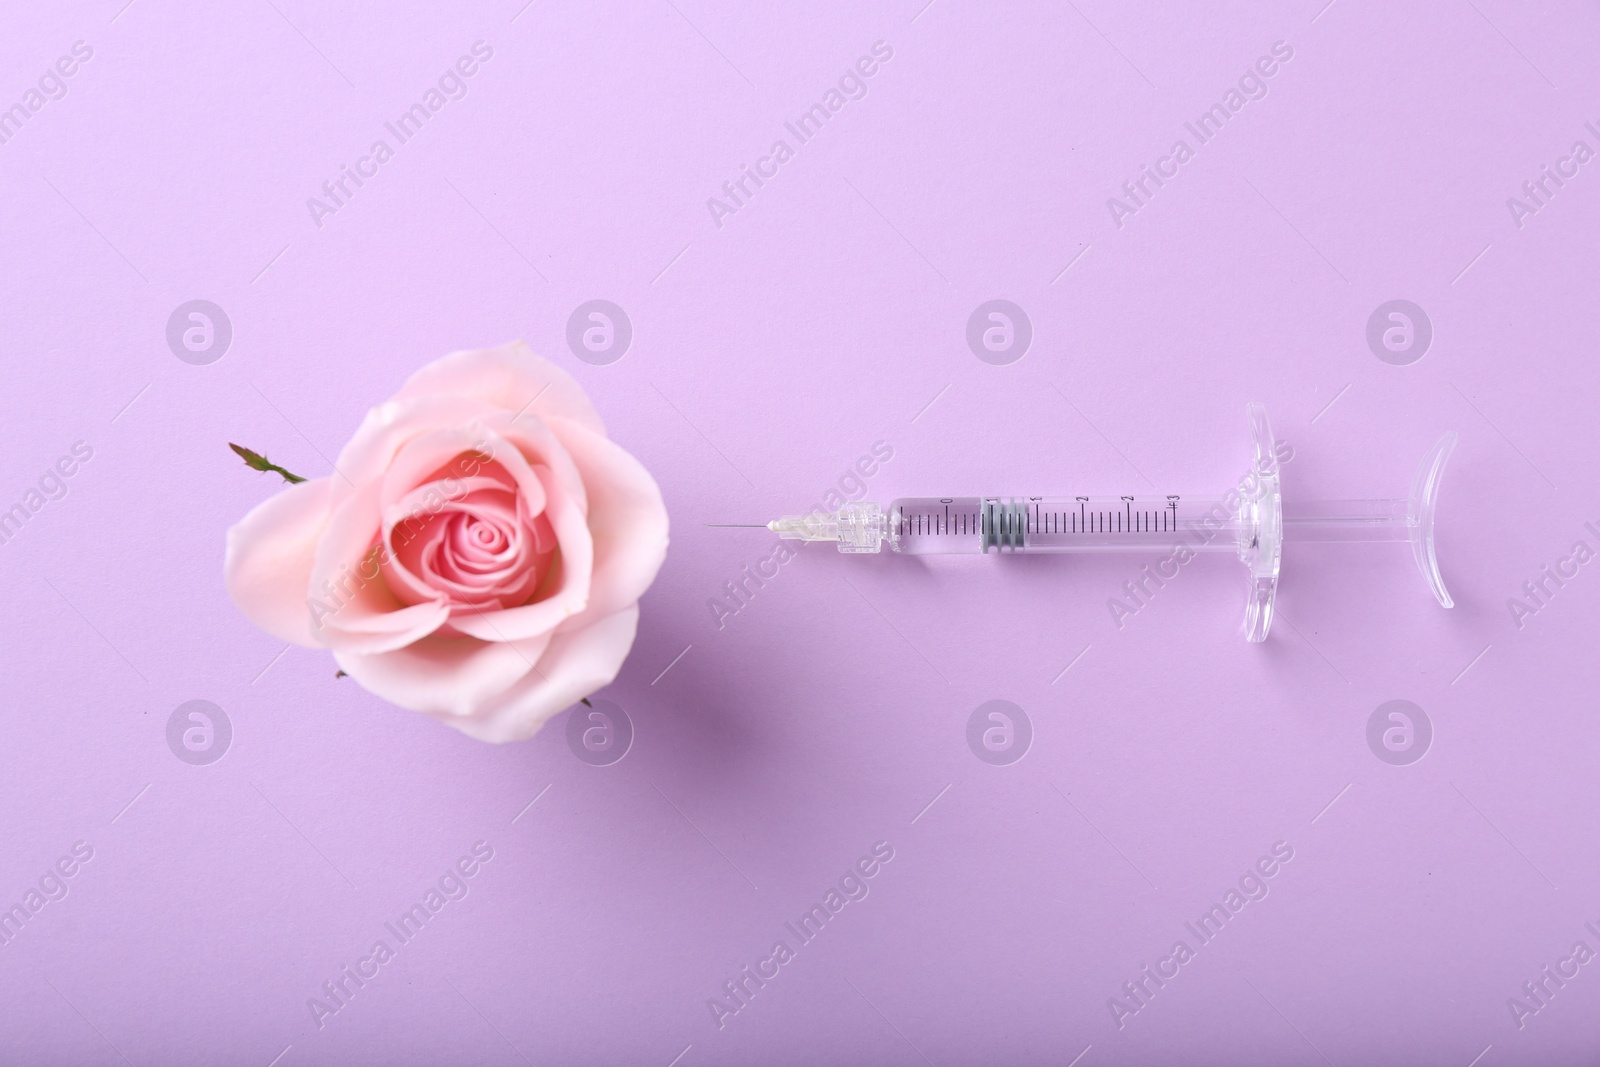 Photo of Cosmetology. Medical syringe and rose flower on violet background, flat lay